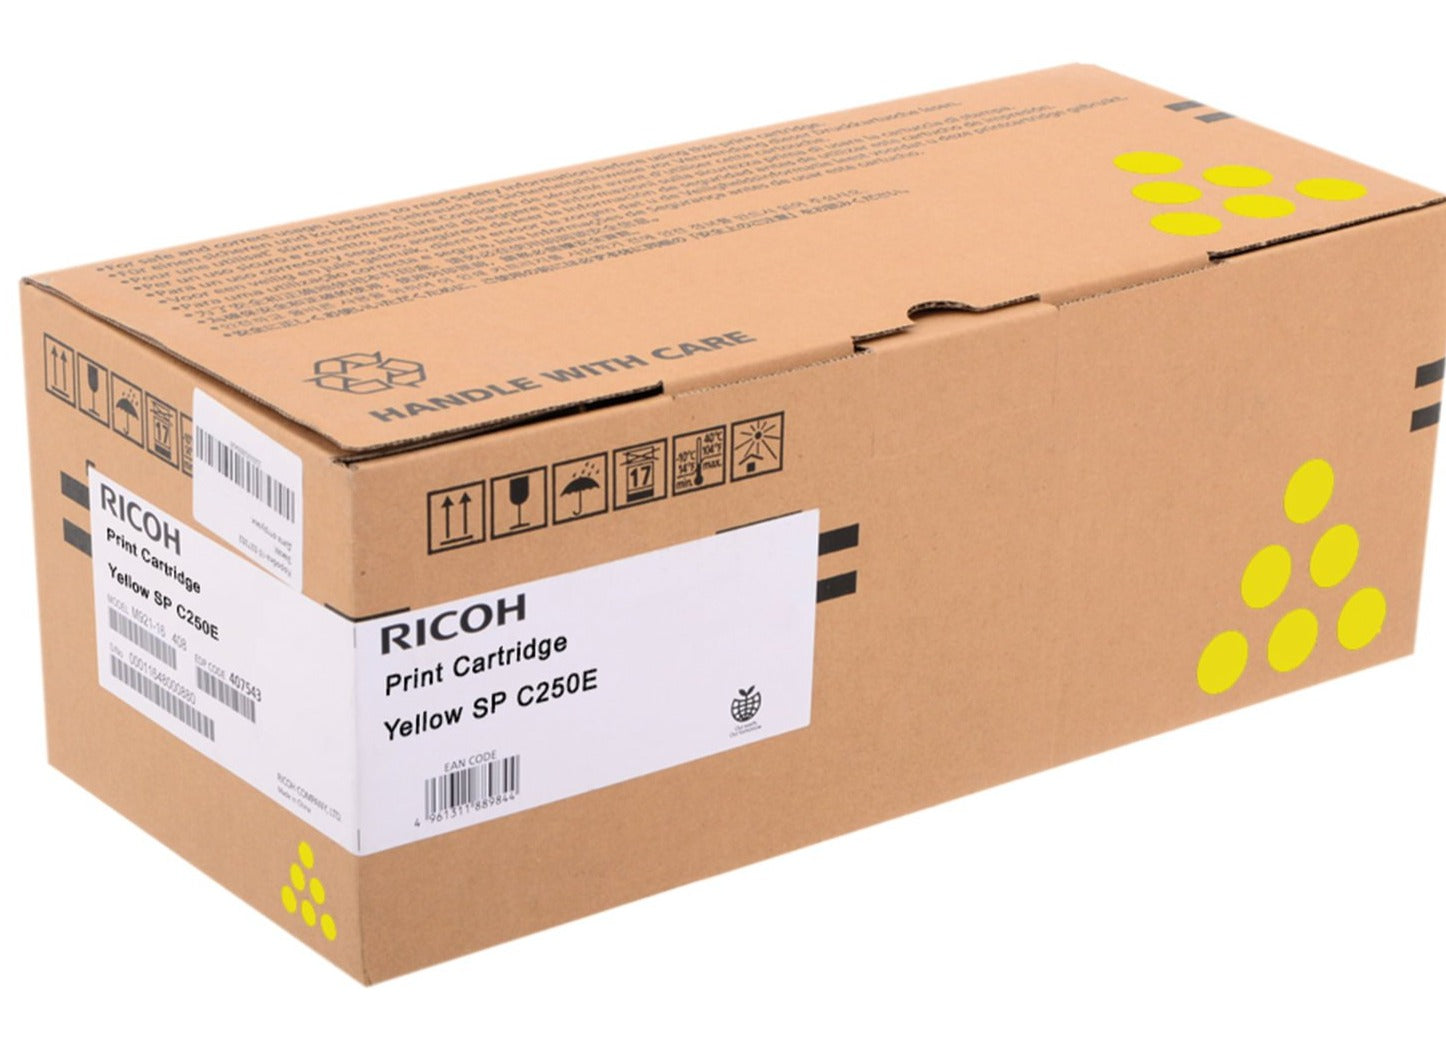 Ricoh   SP C250sf Toner Cartridges